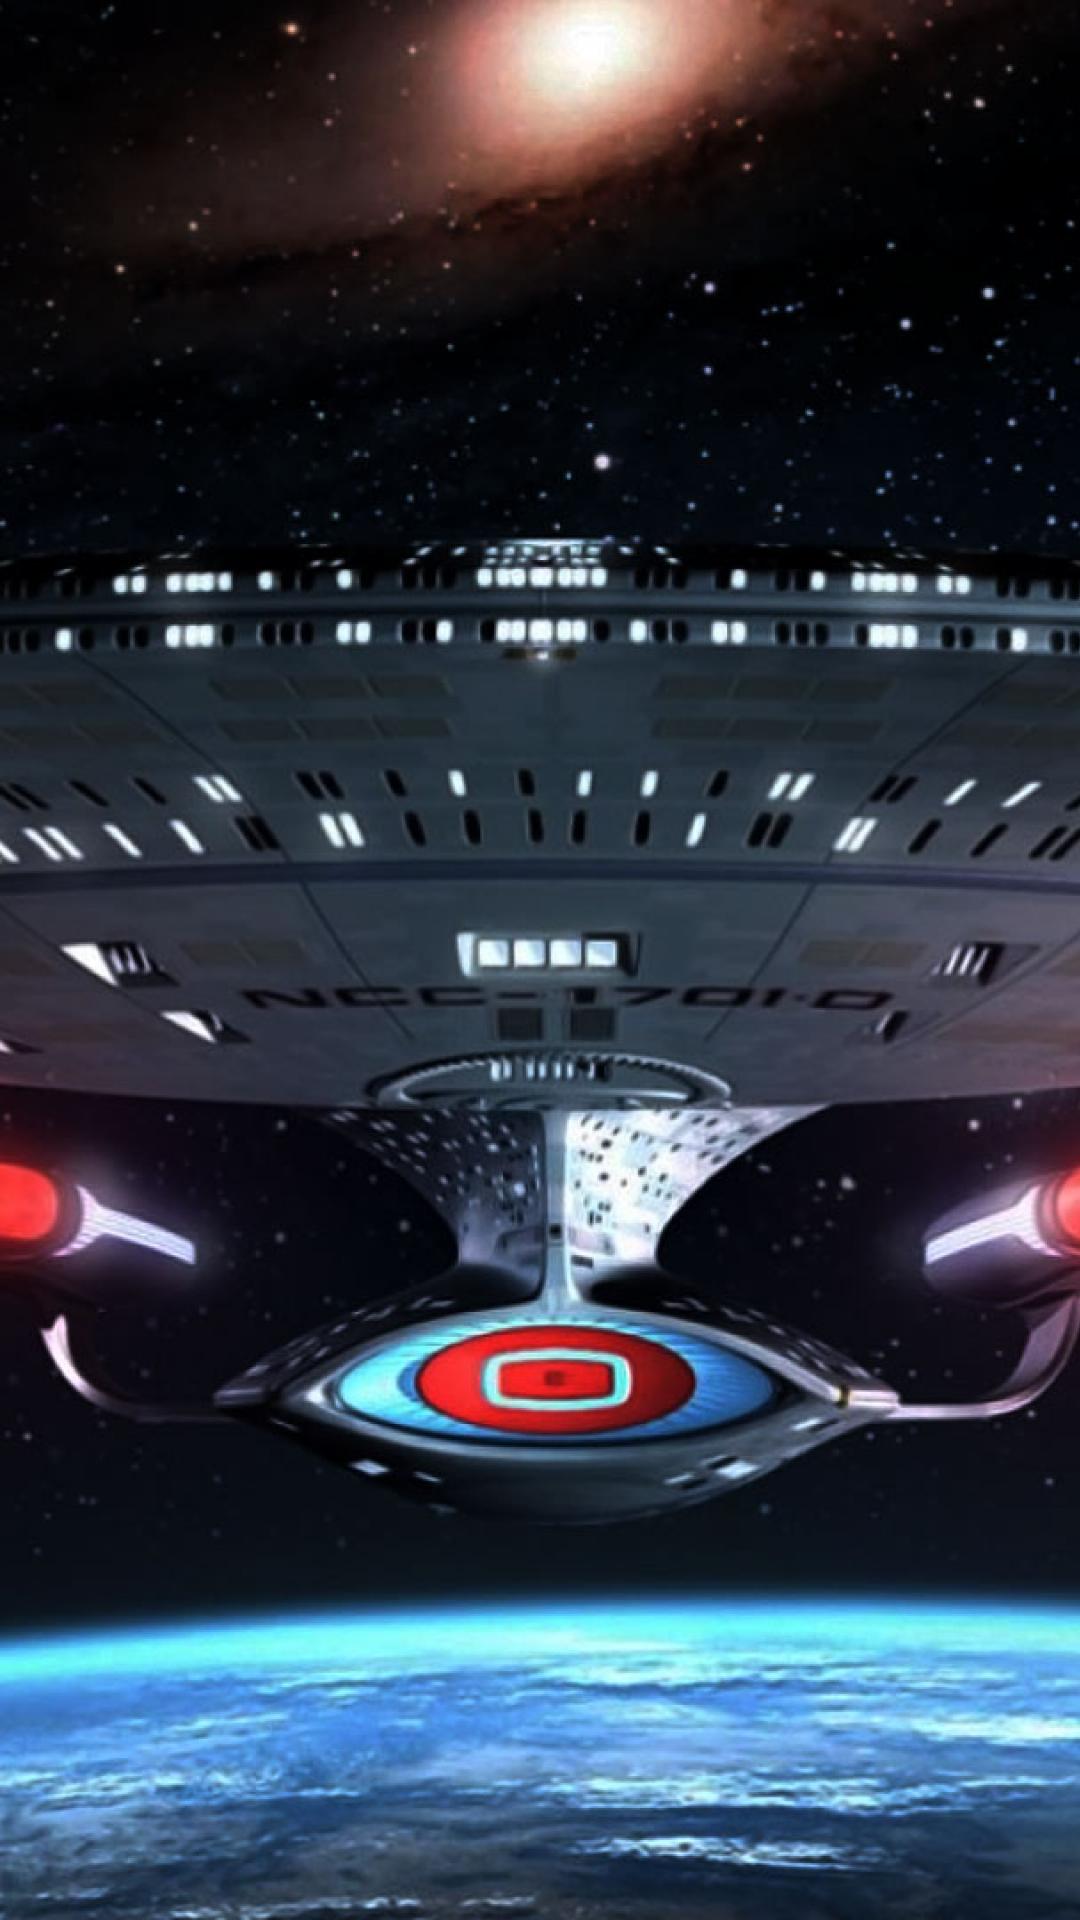 Tv Movies Star Trek Show Spaceships Science Fiction Uss Enterprise Ncc